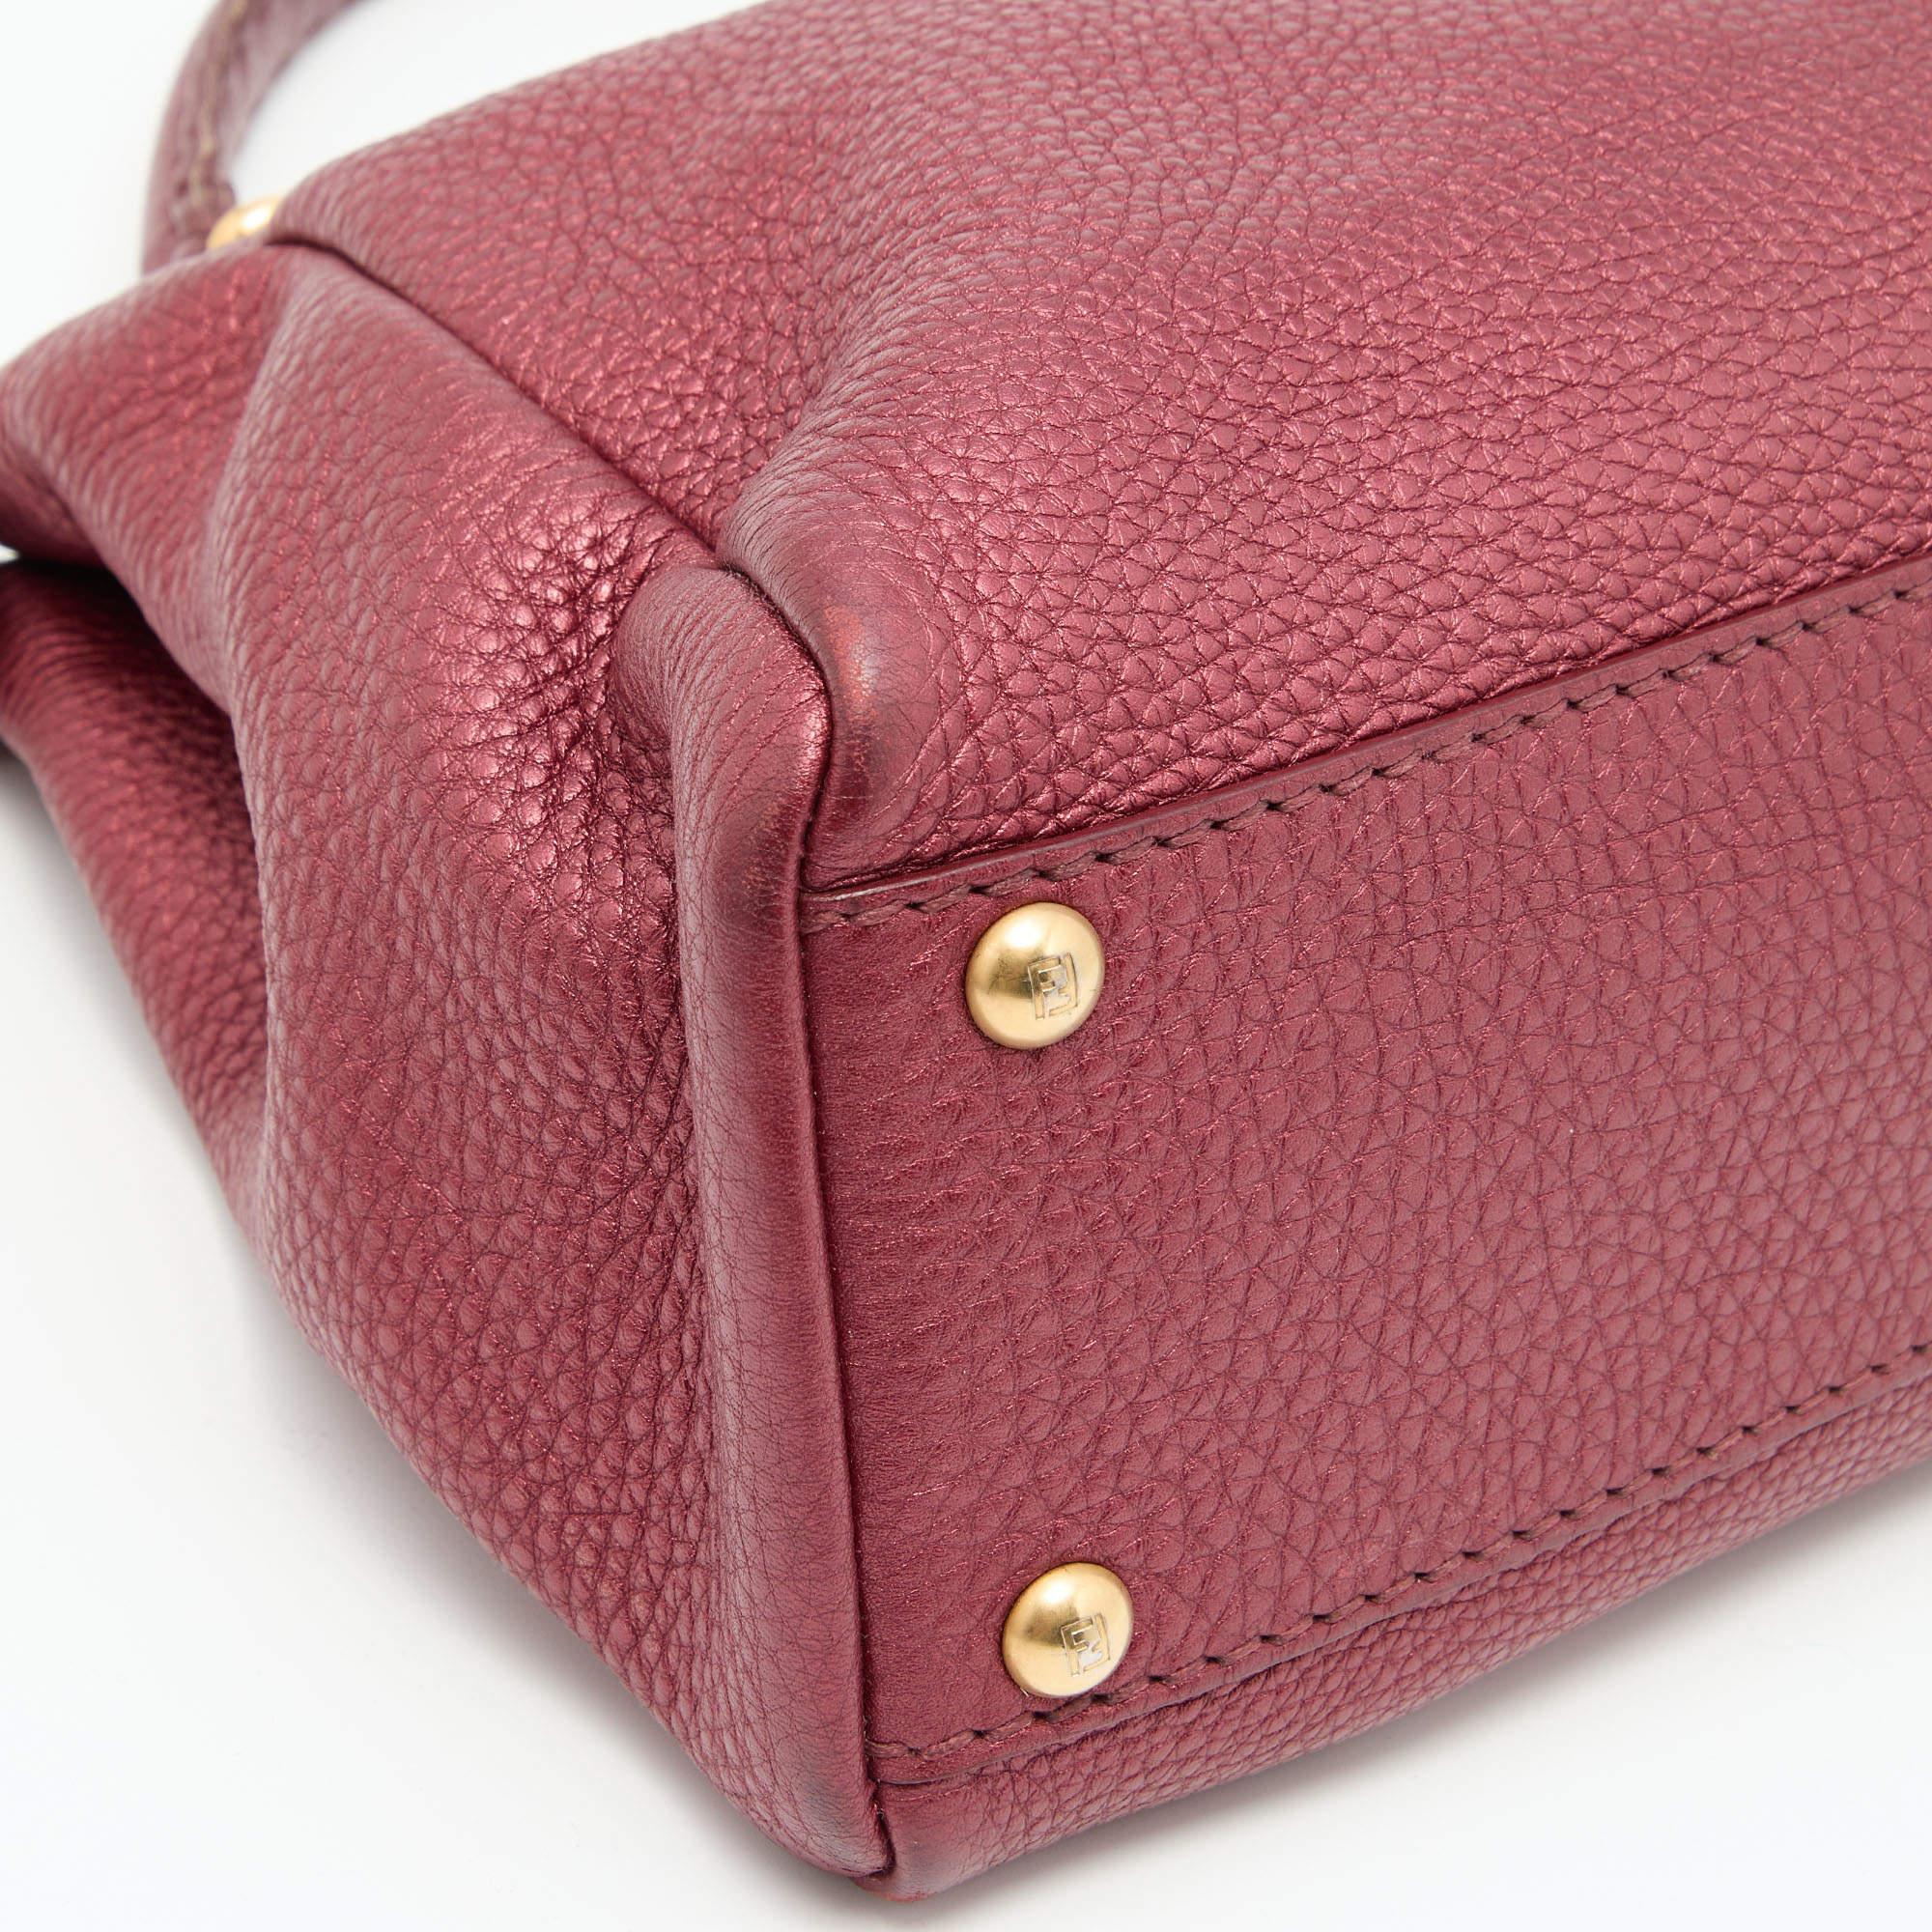 Fendi Metallic Red Leather Sellier Medium Peekaboo Top Handle Bag 2